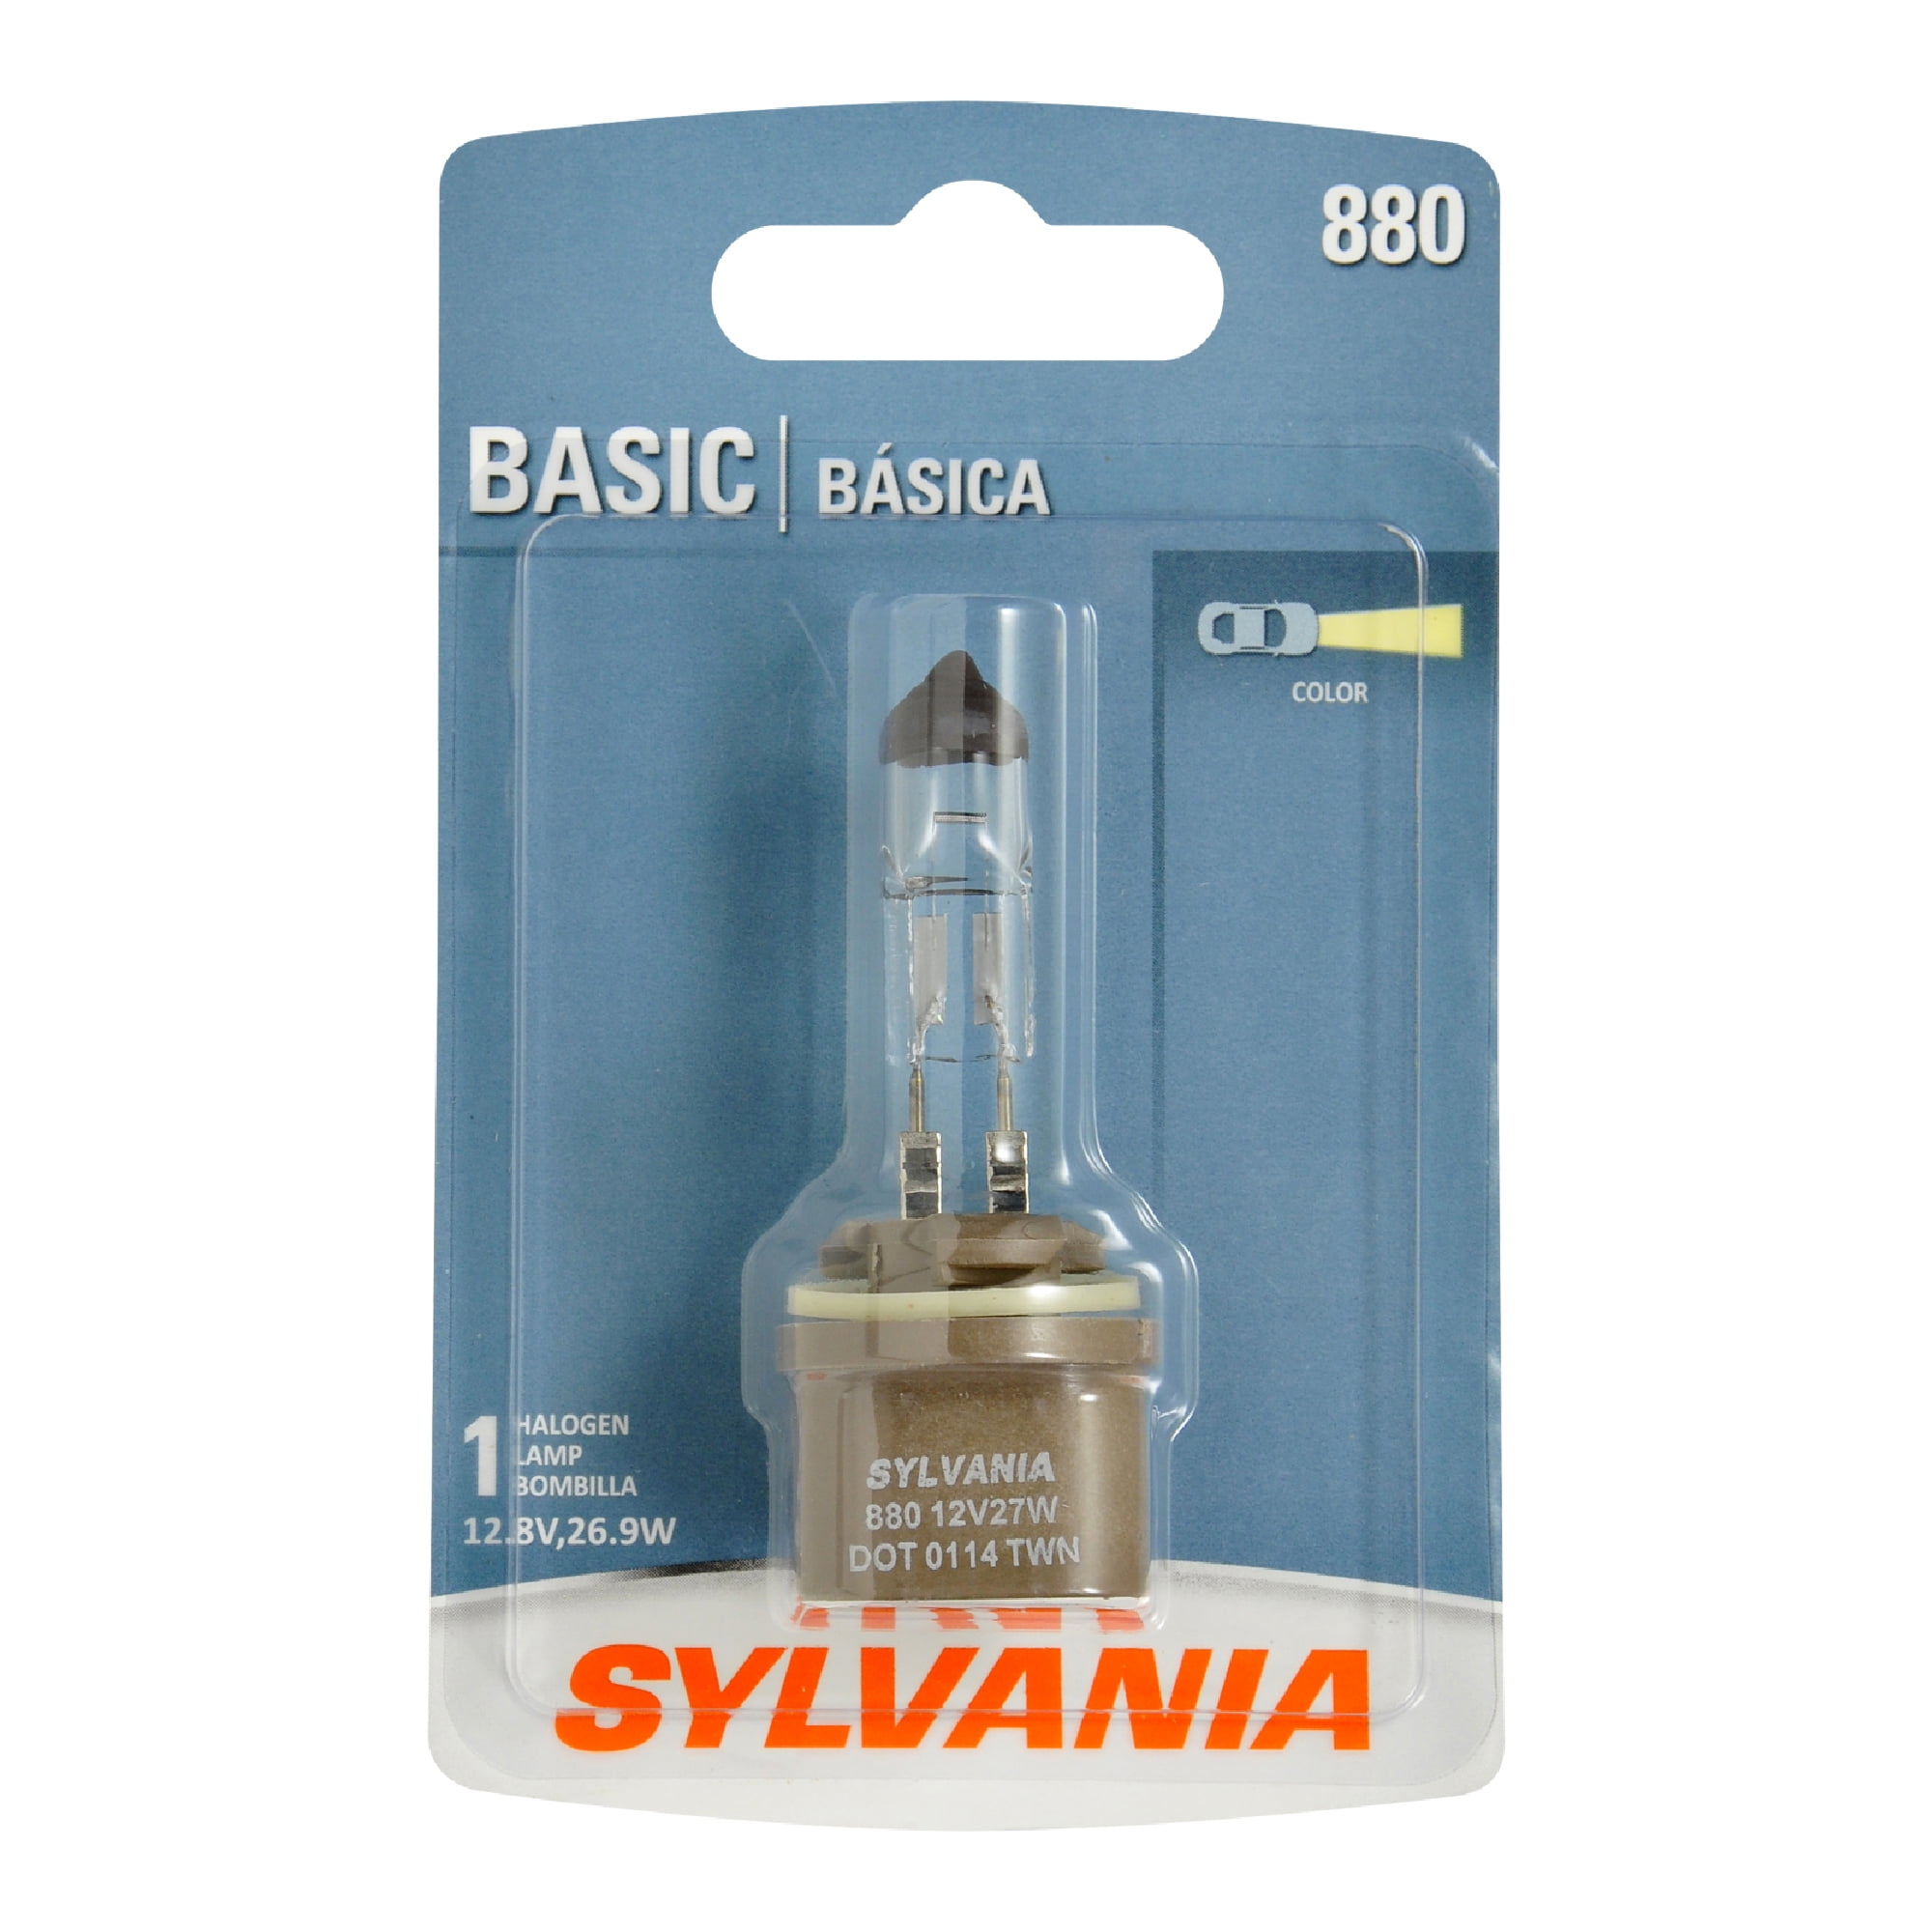 Sylvania 880 Basic Auto Halogen Fog Bulb, Pack of 1.